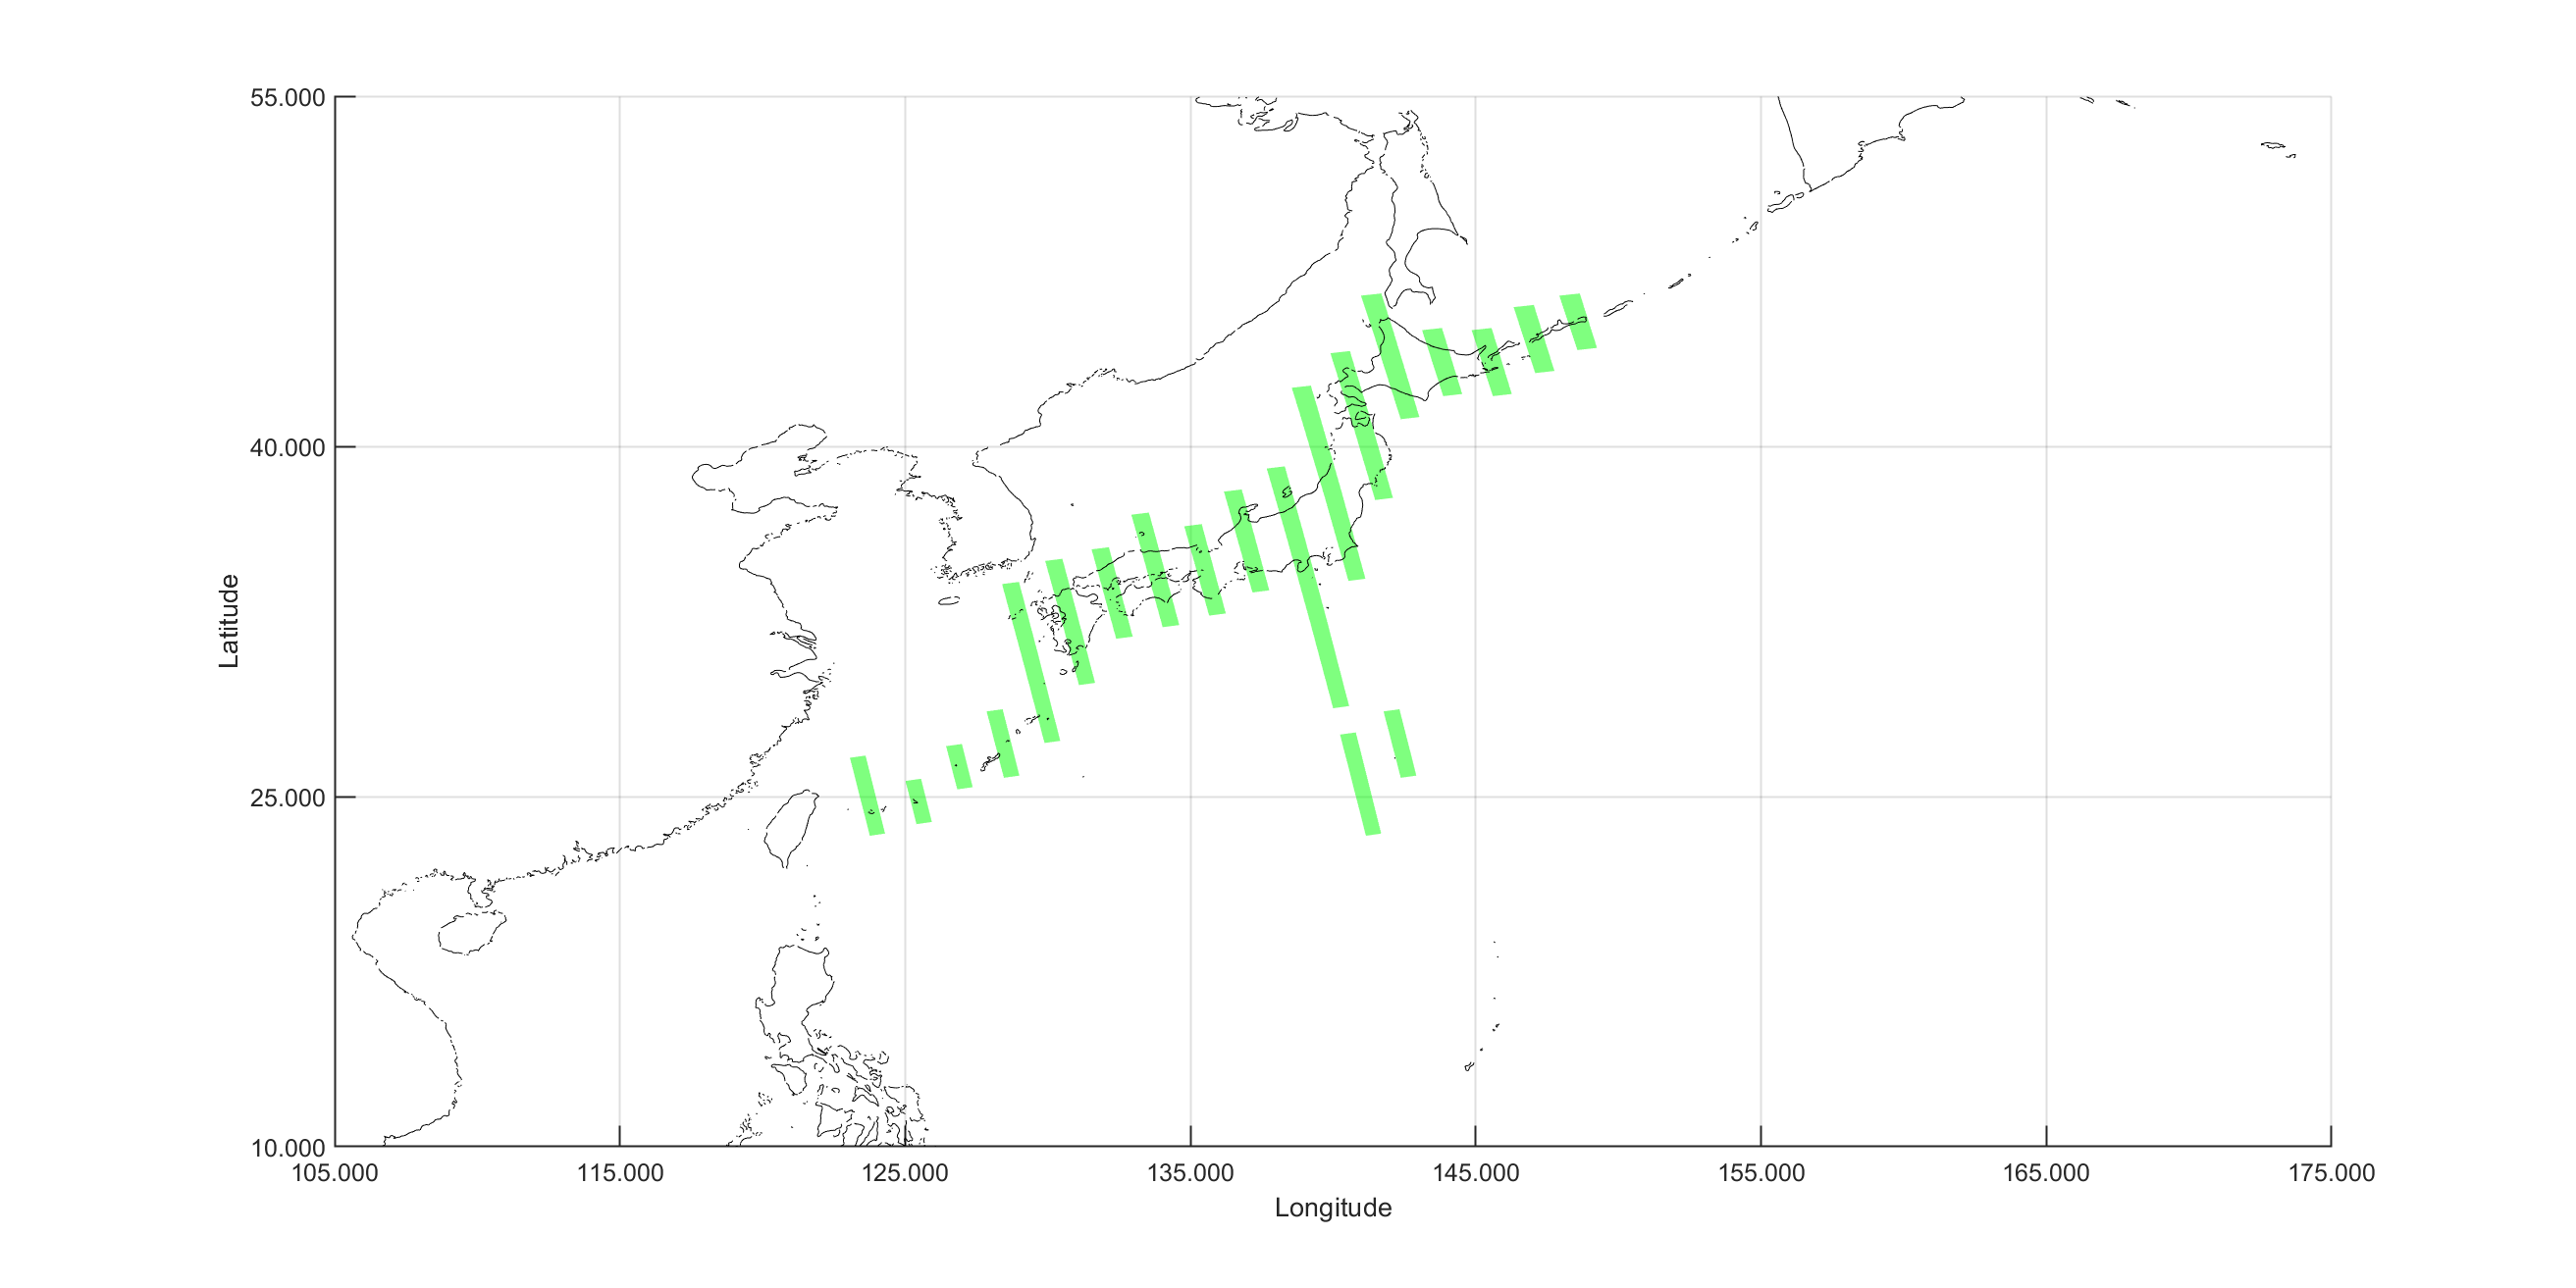 CYCLE_242 - Japan Ascending passes